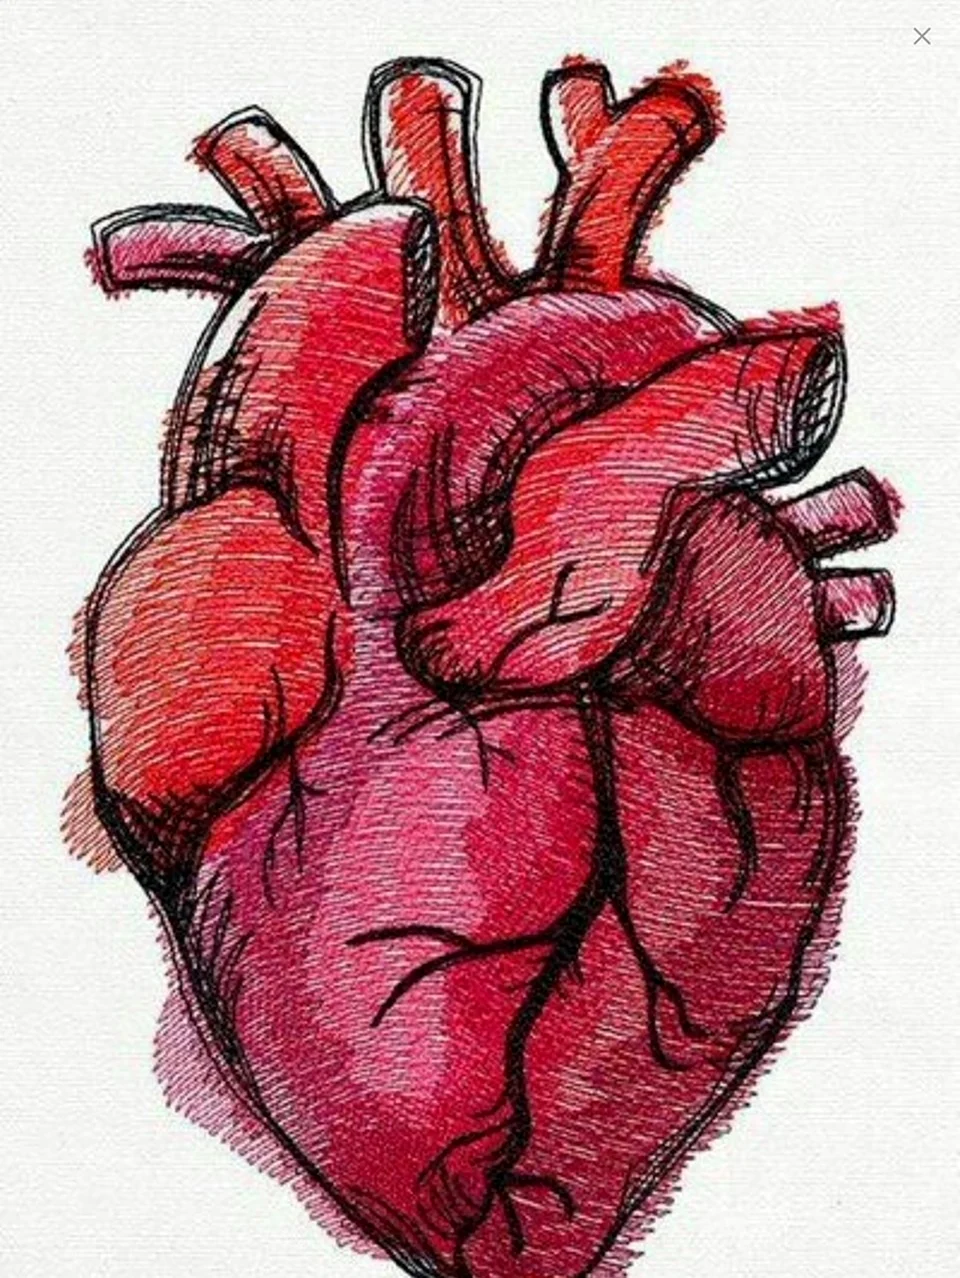 Нарисовать сердце. Для срисовки